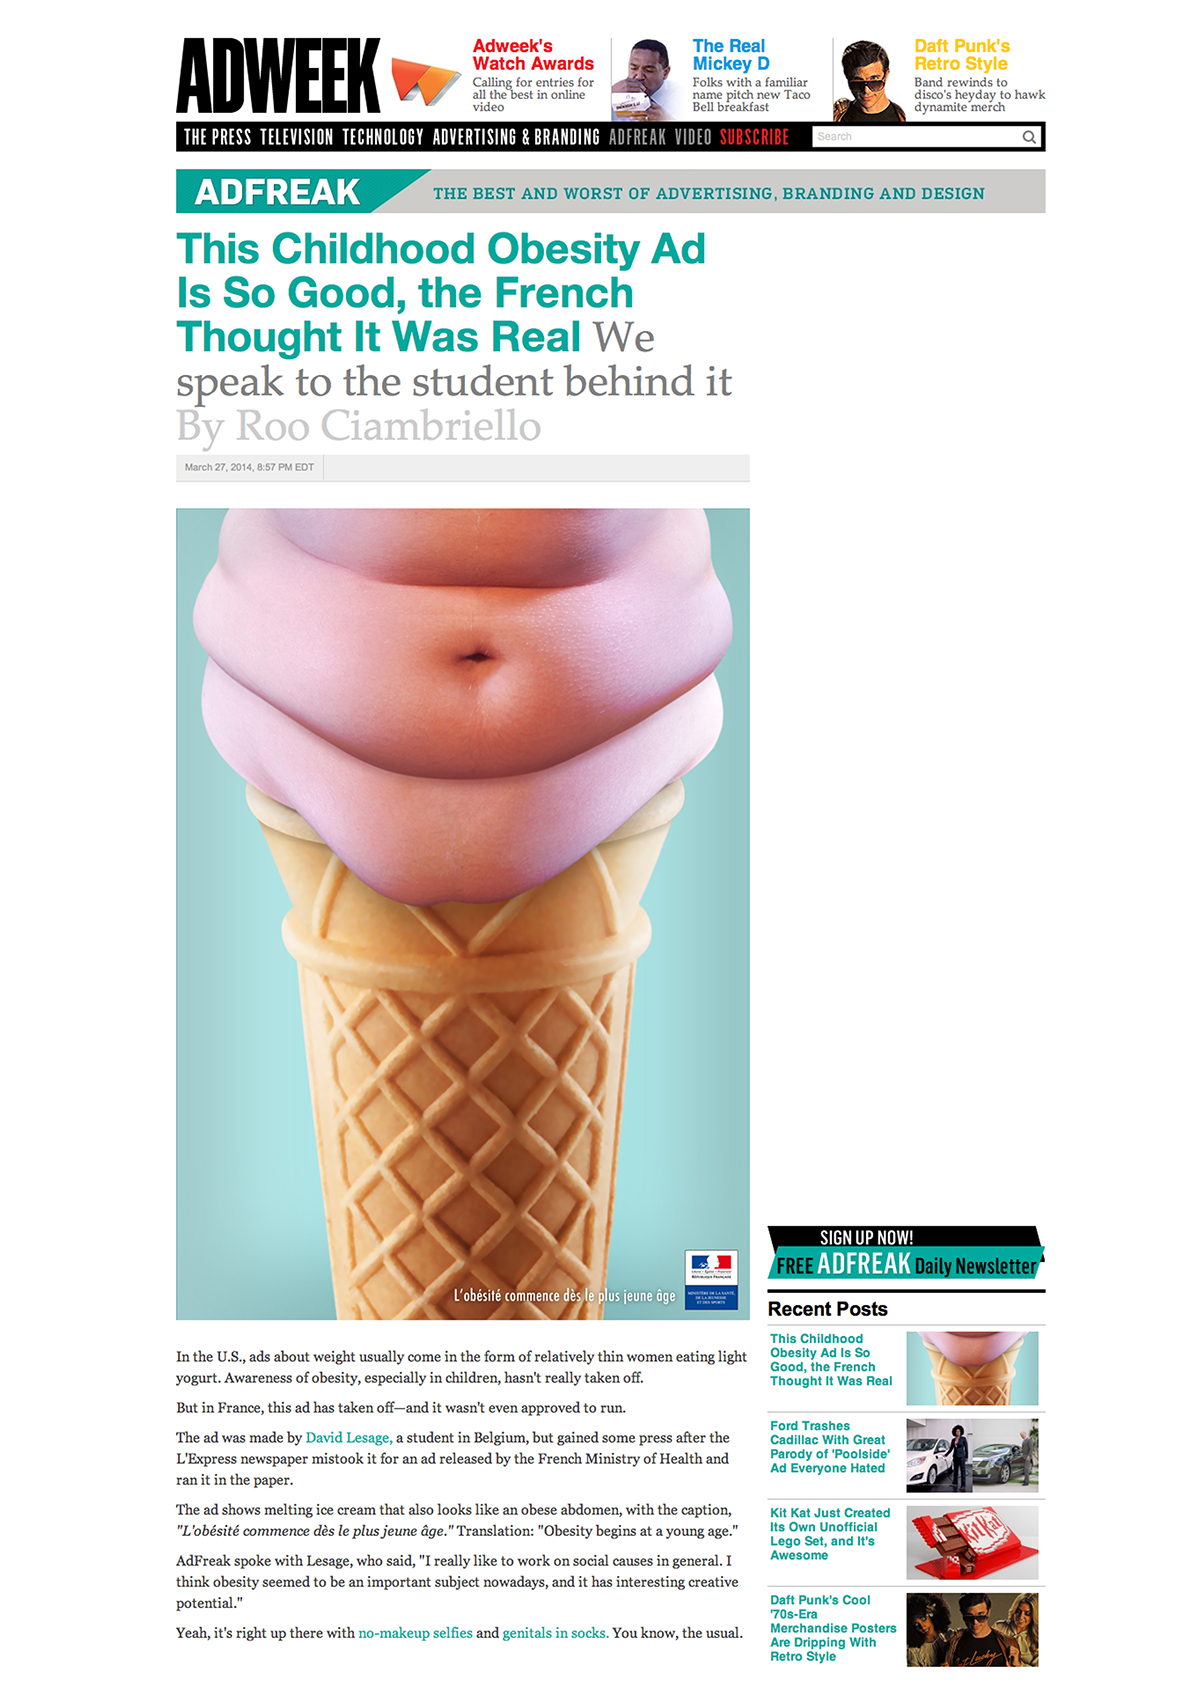 icecream belly Obesity sugar pink blue Bisection prevention ad child